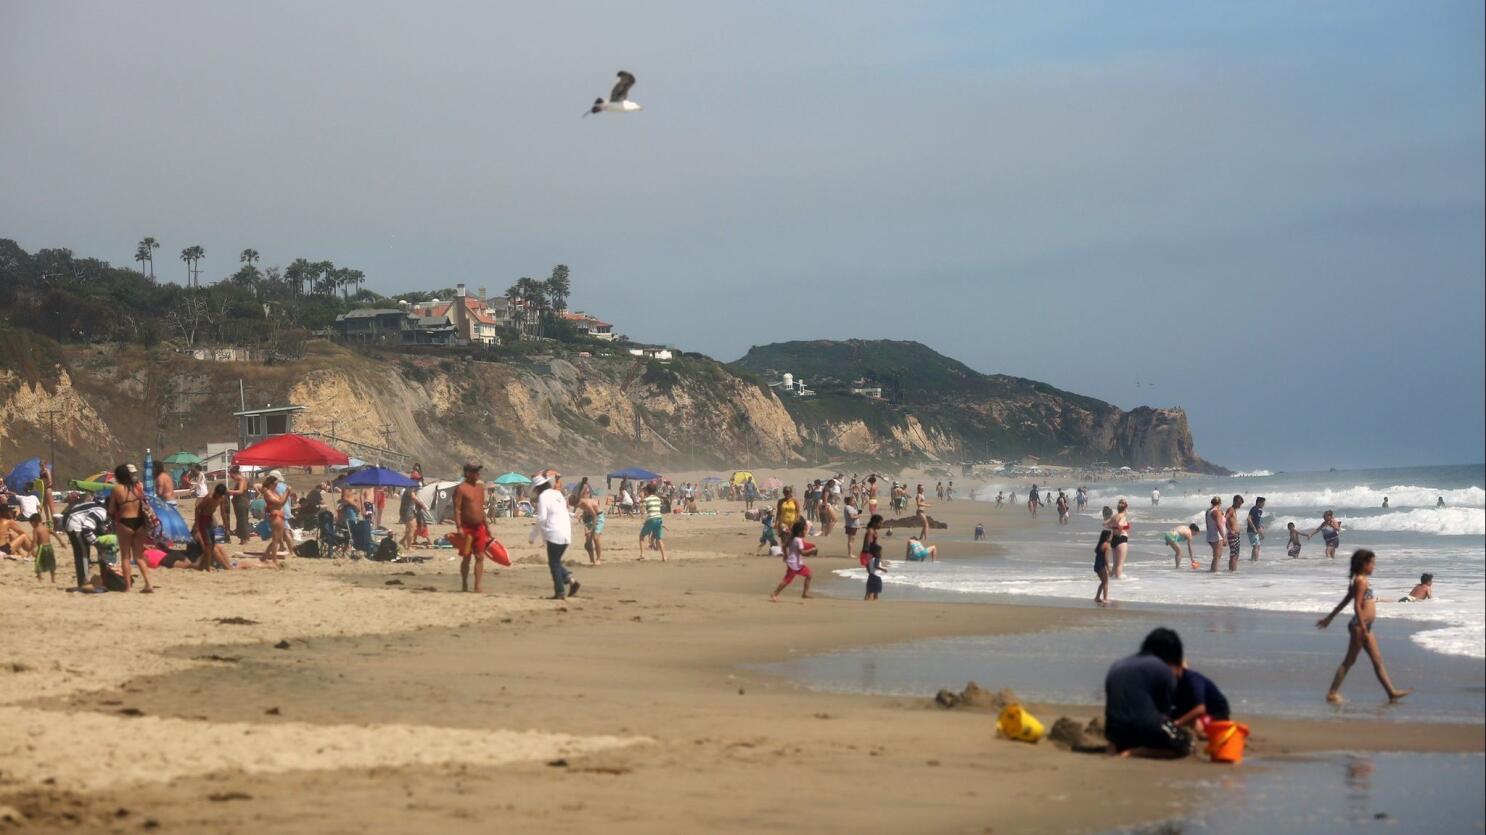 ZUMA BEACH, CALIFORNIA, USA - People on Zuma beach, public beach